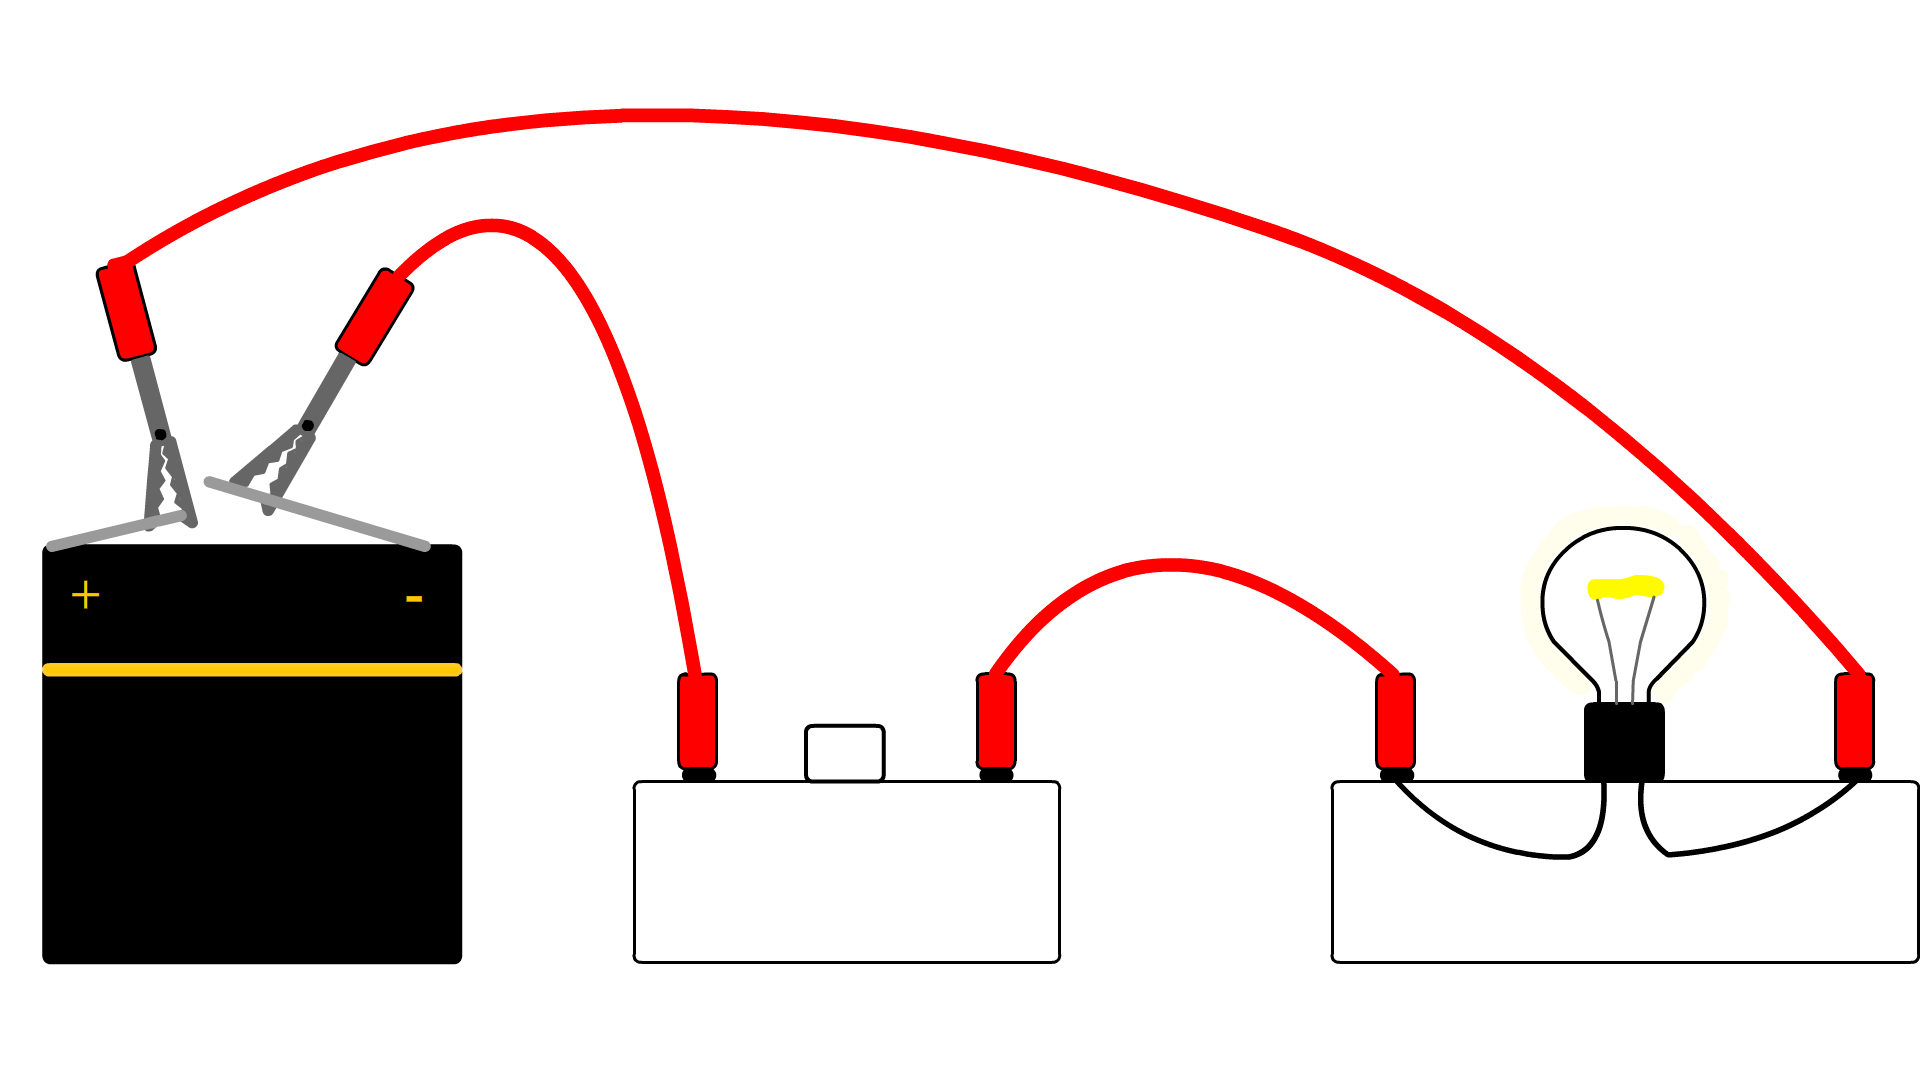 Parallel circuit with Bulb and Switch. Electric scheme physics. Плазма рисунок физика. Клеммы на рисунке физика.